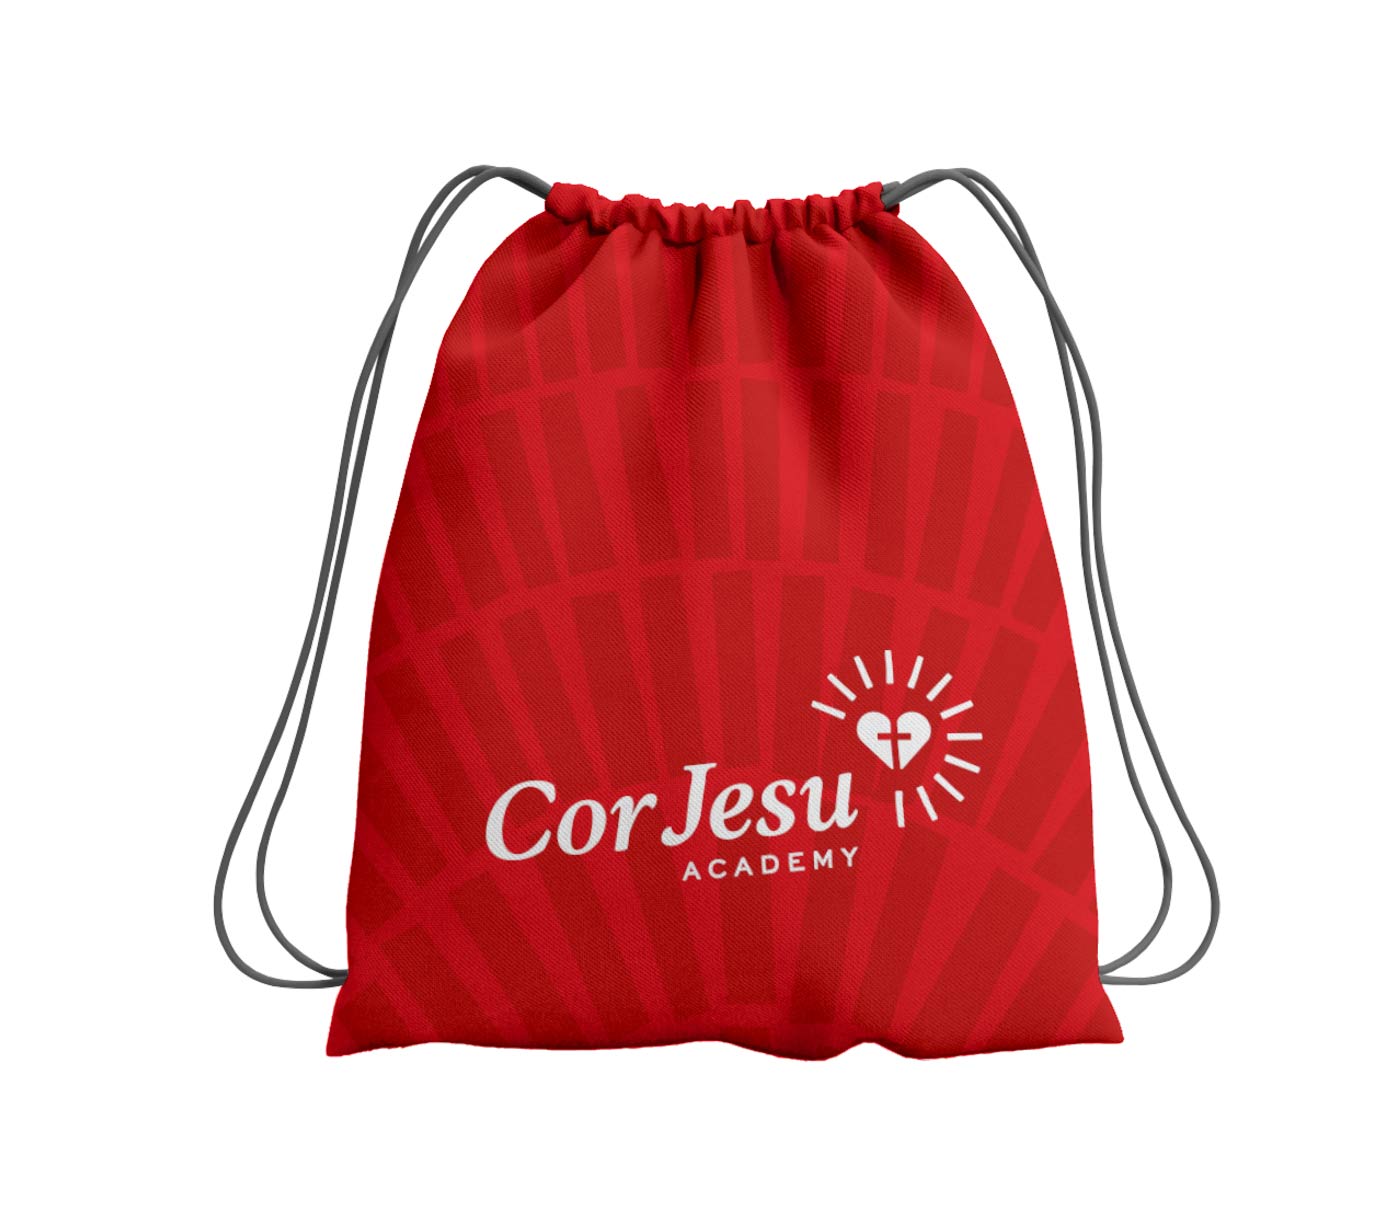 Cor Jesu drawstring bag with the school's new branding